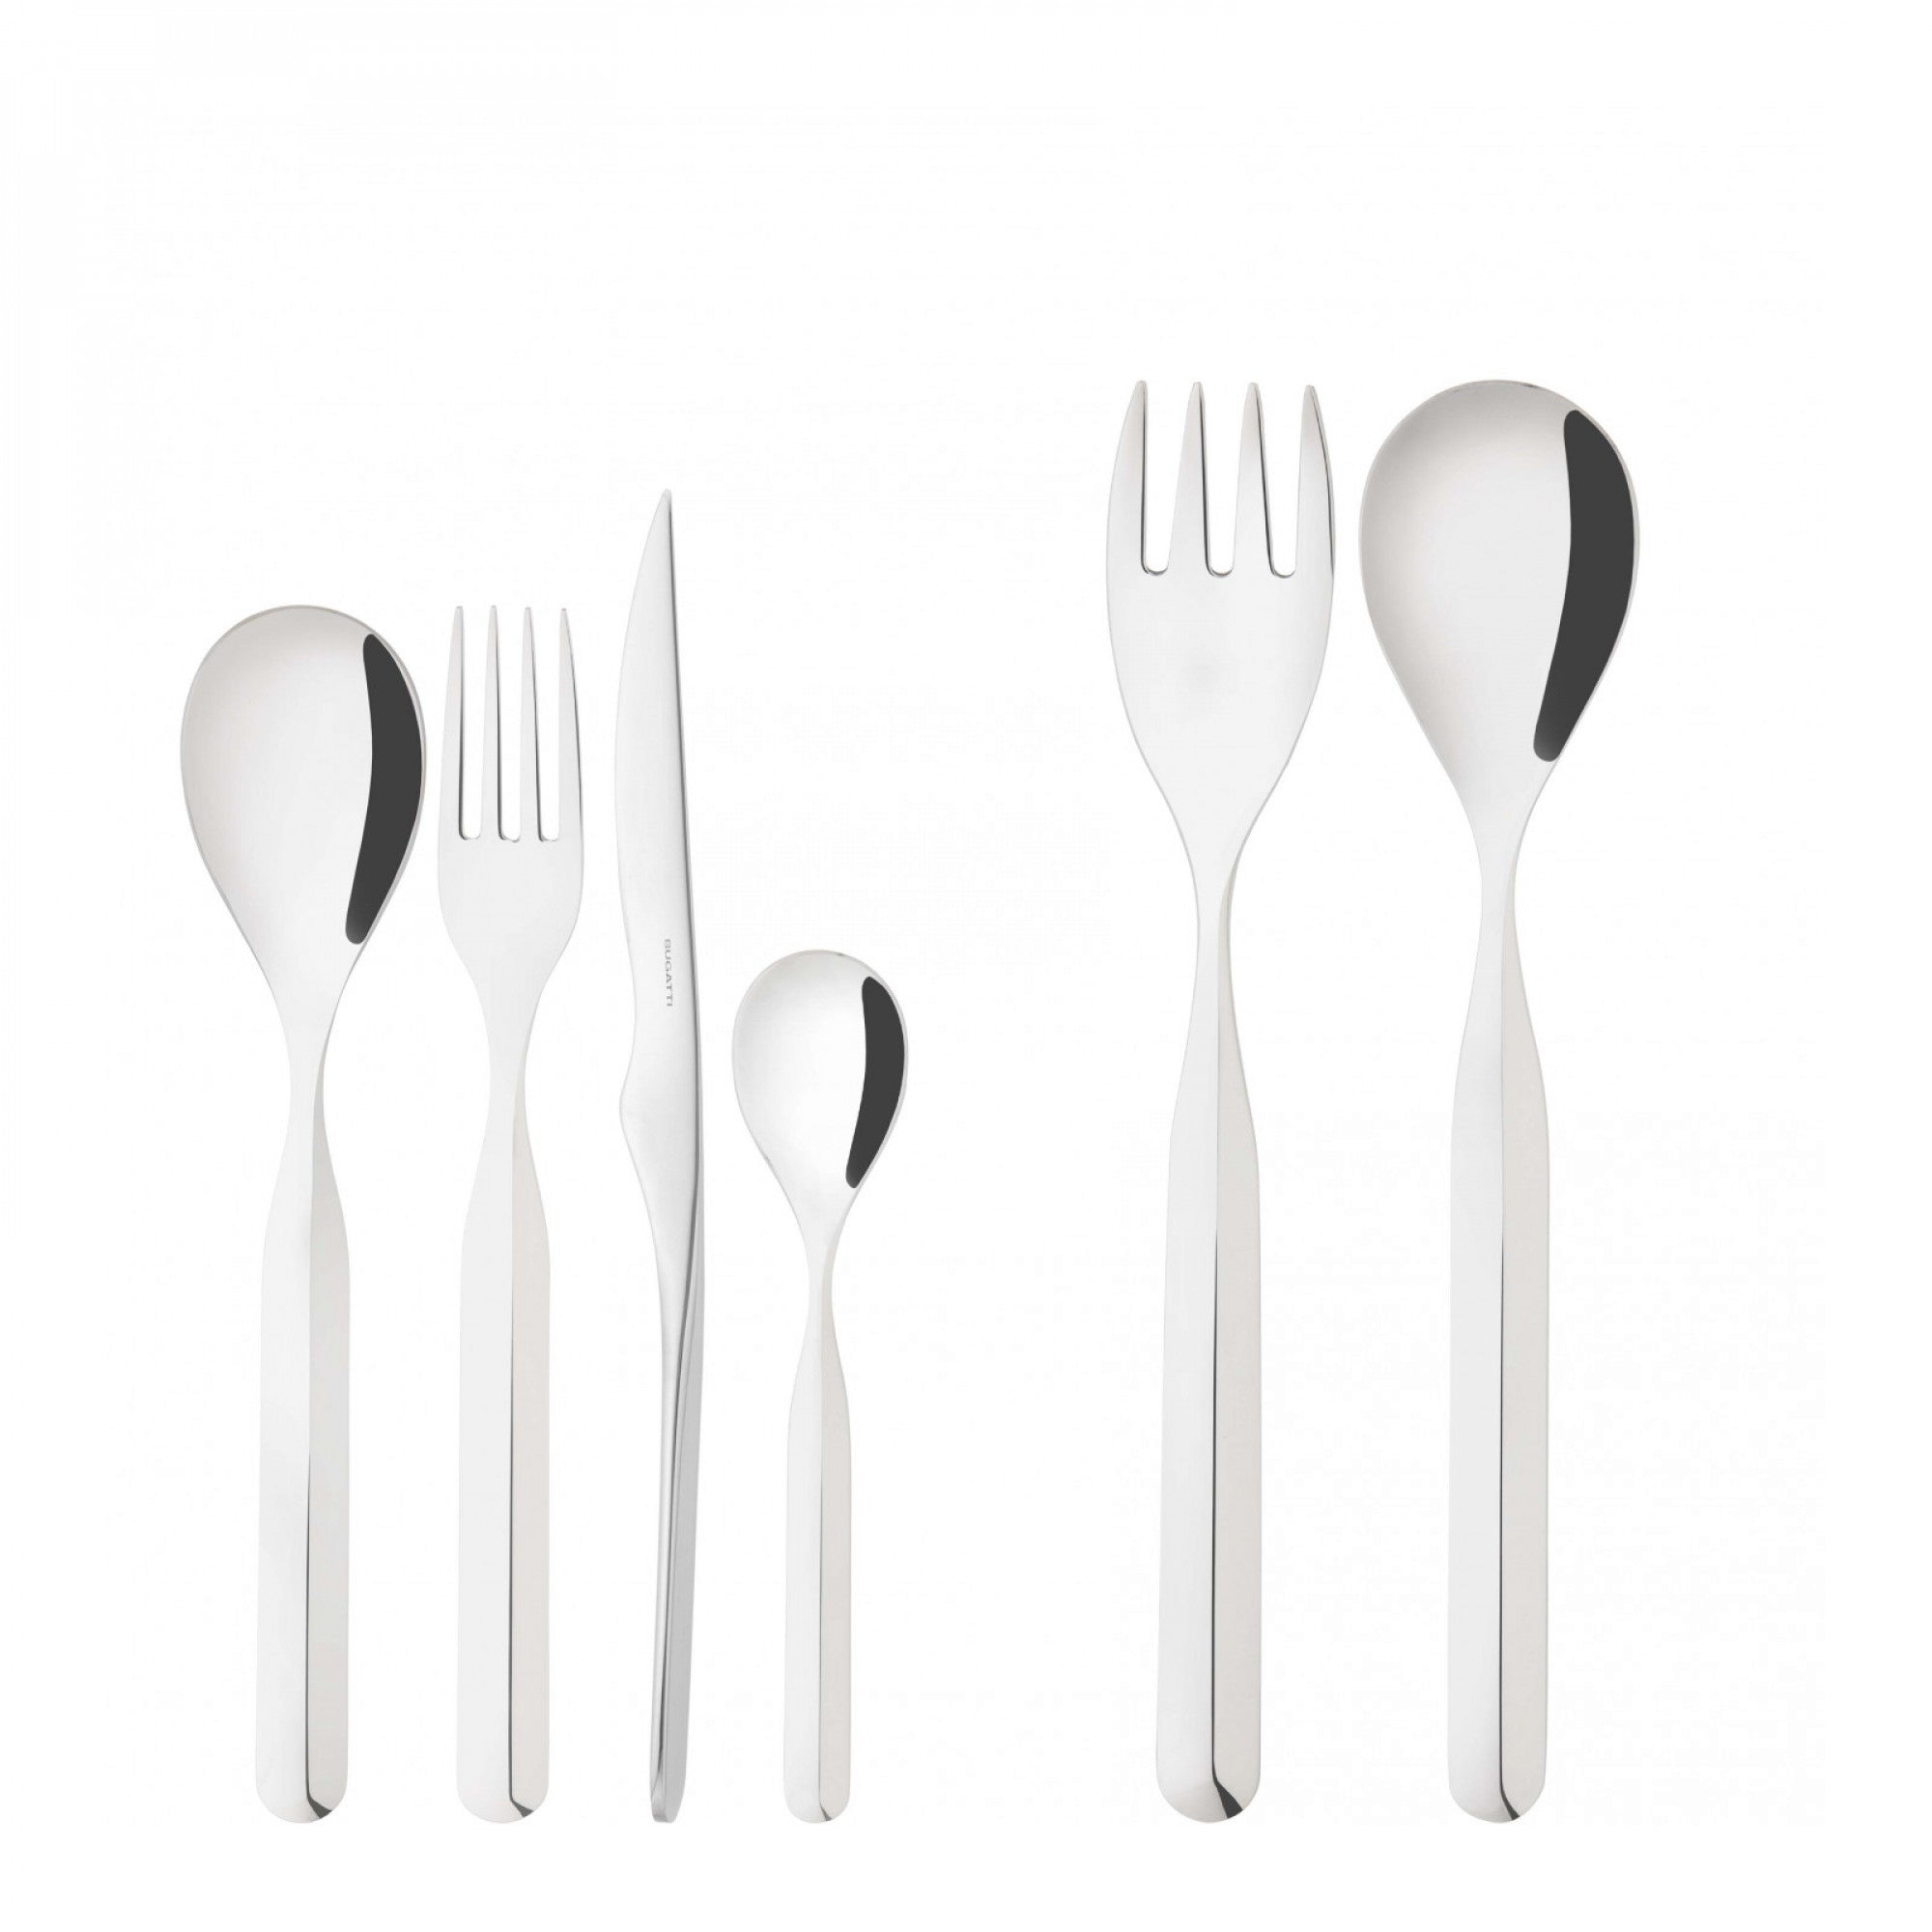 BUGATTI, Vidal, 50-piece cutlery set in 18/10 stainless steel